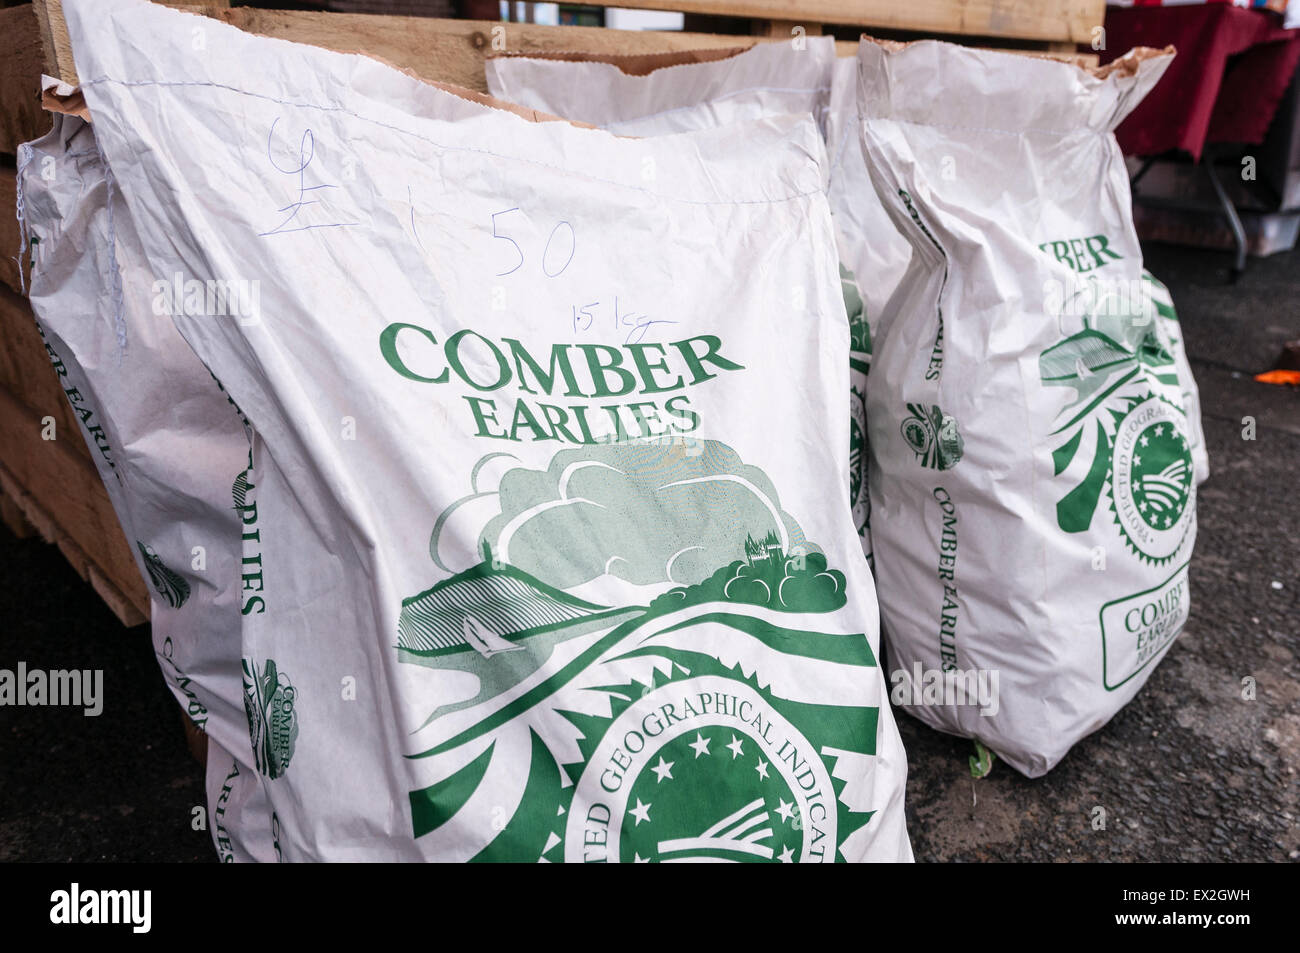 Comber 'Earlies' potatoes on sale at the Comber Potato Fair Stock Photo